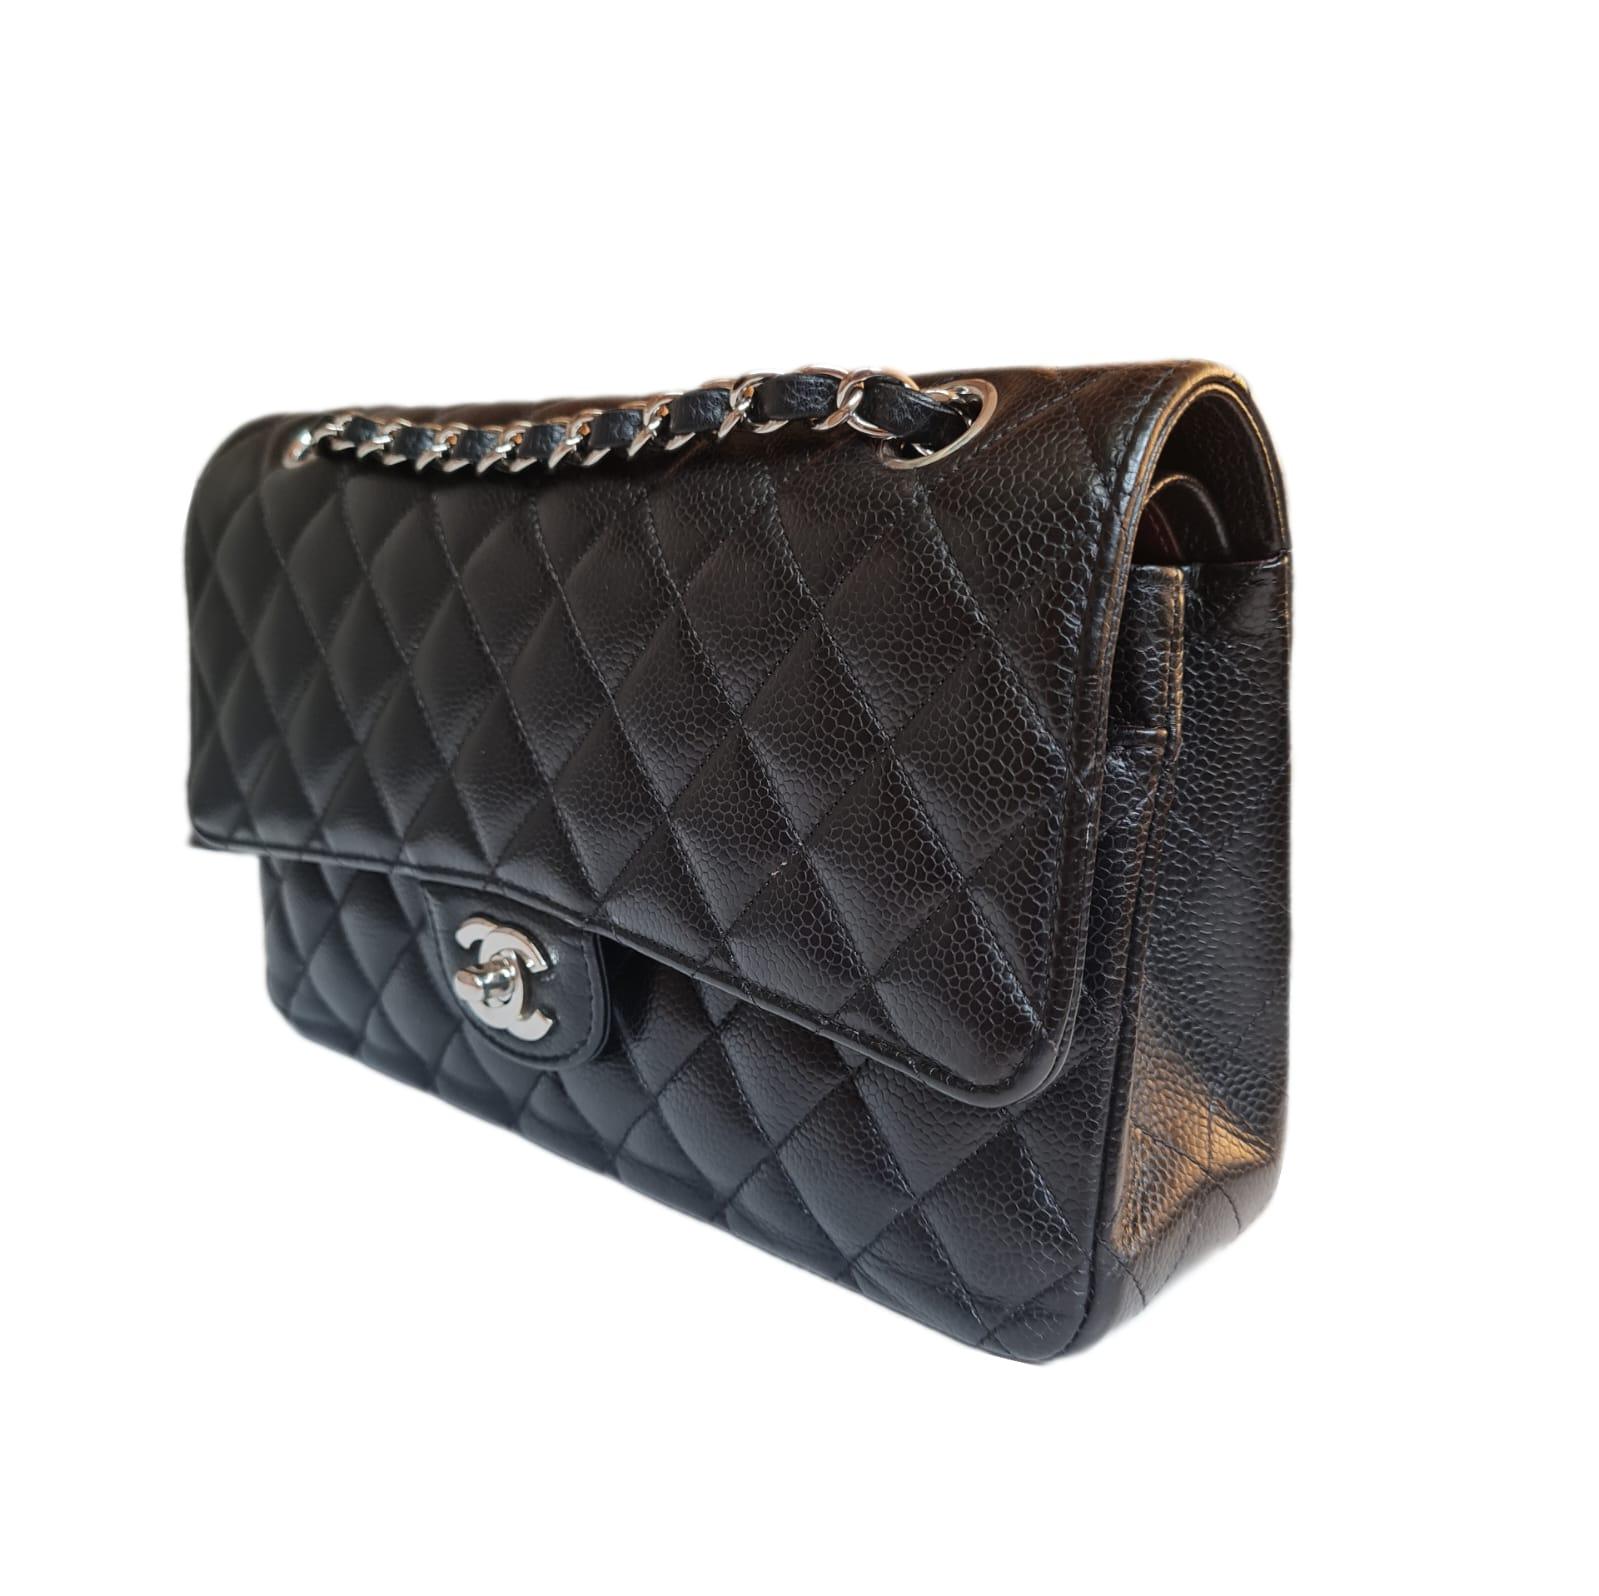 2021 Chanel Black Caviar Classic Double Flap Bag SHW 14